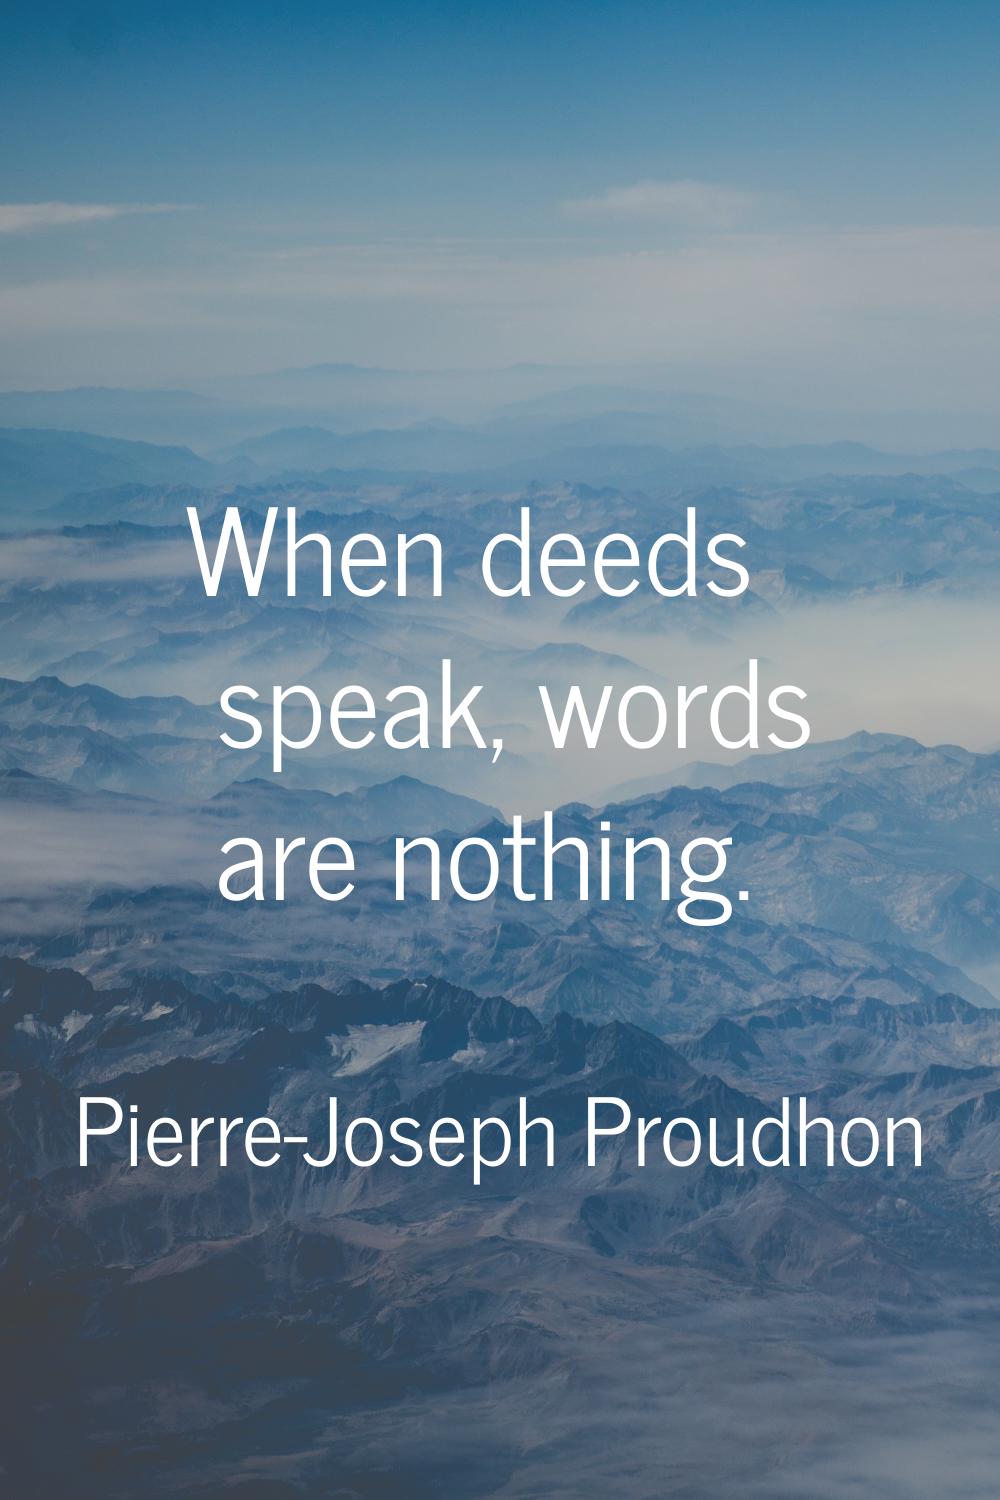 When deeds speak, words are nothing.